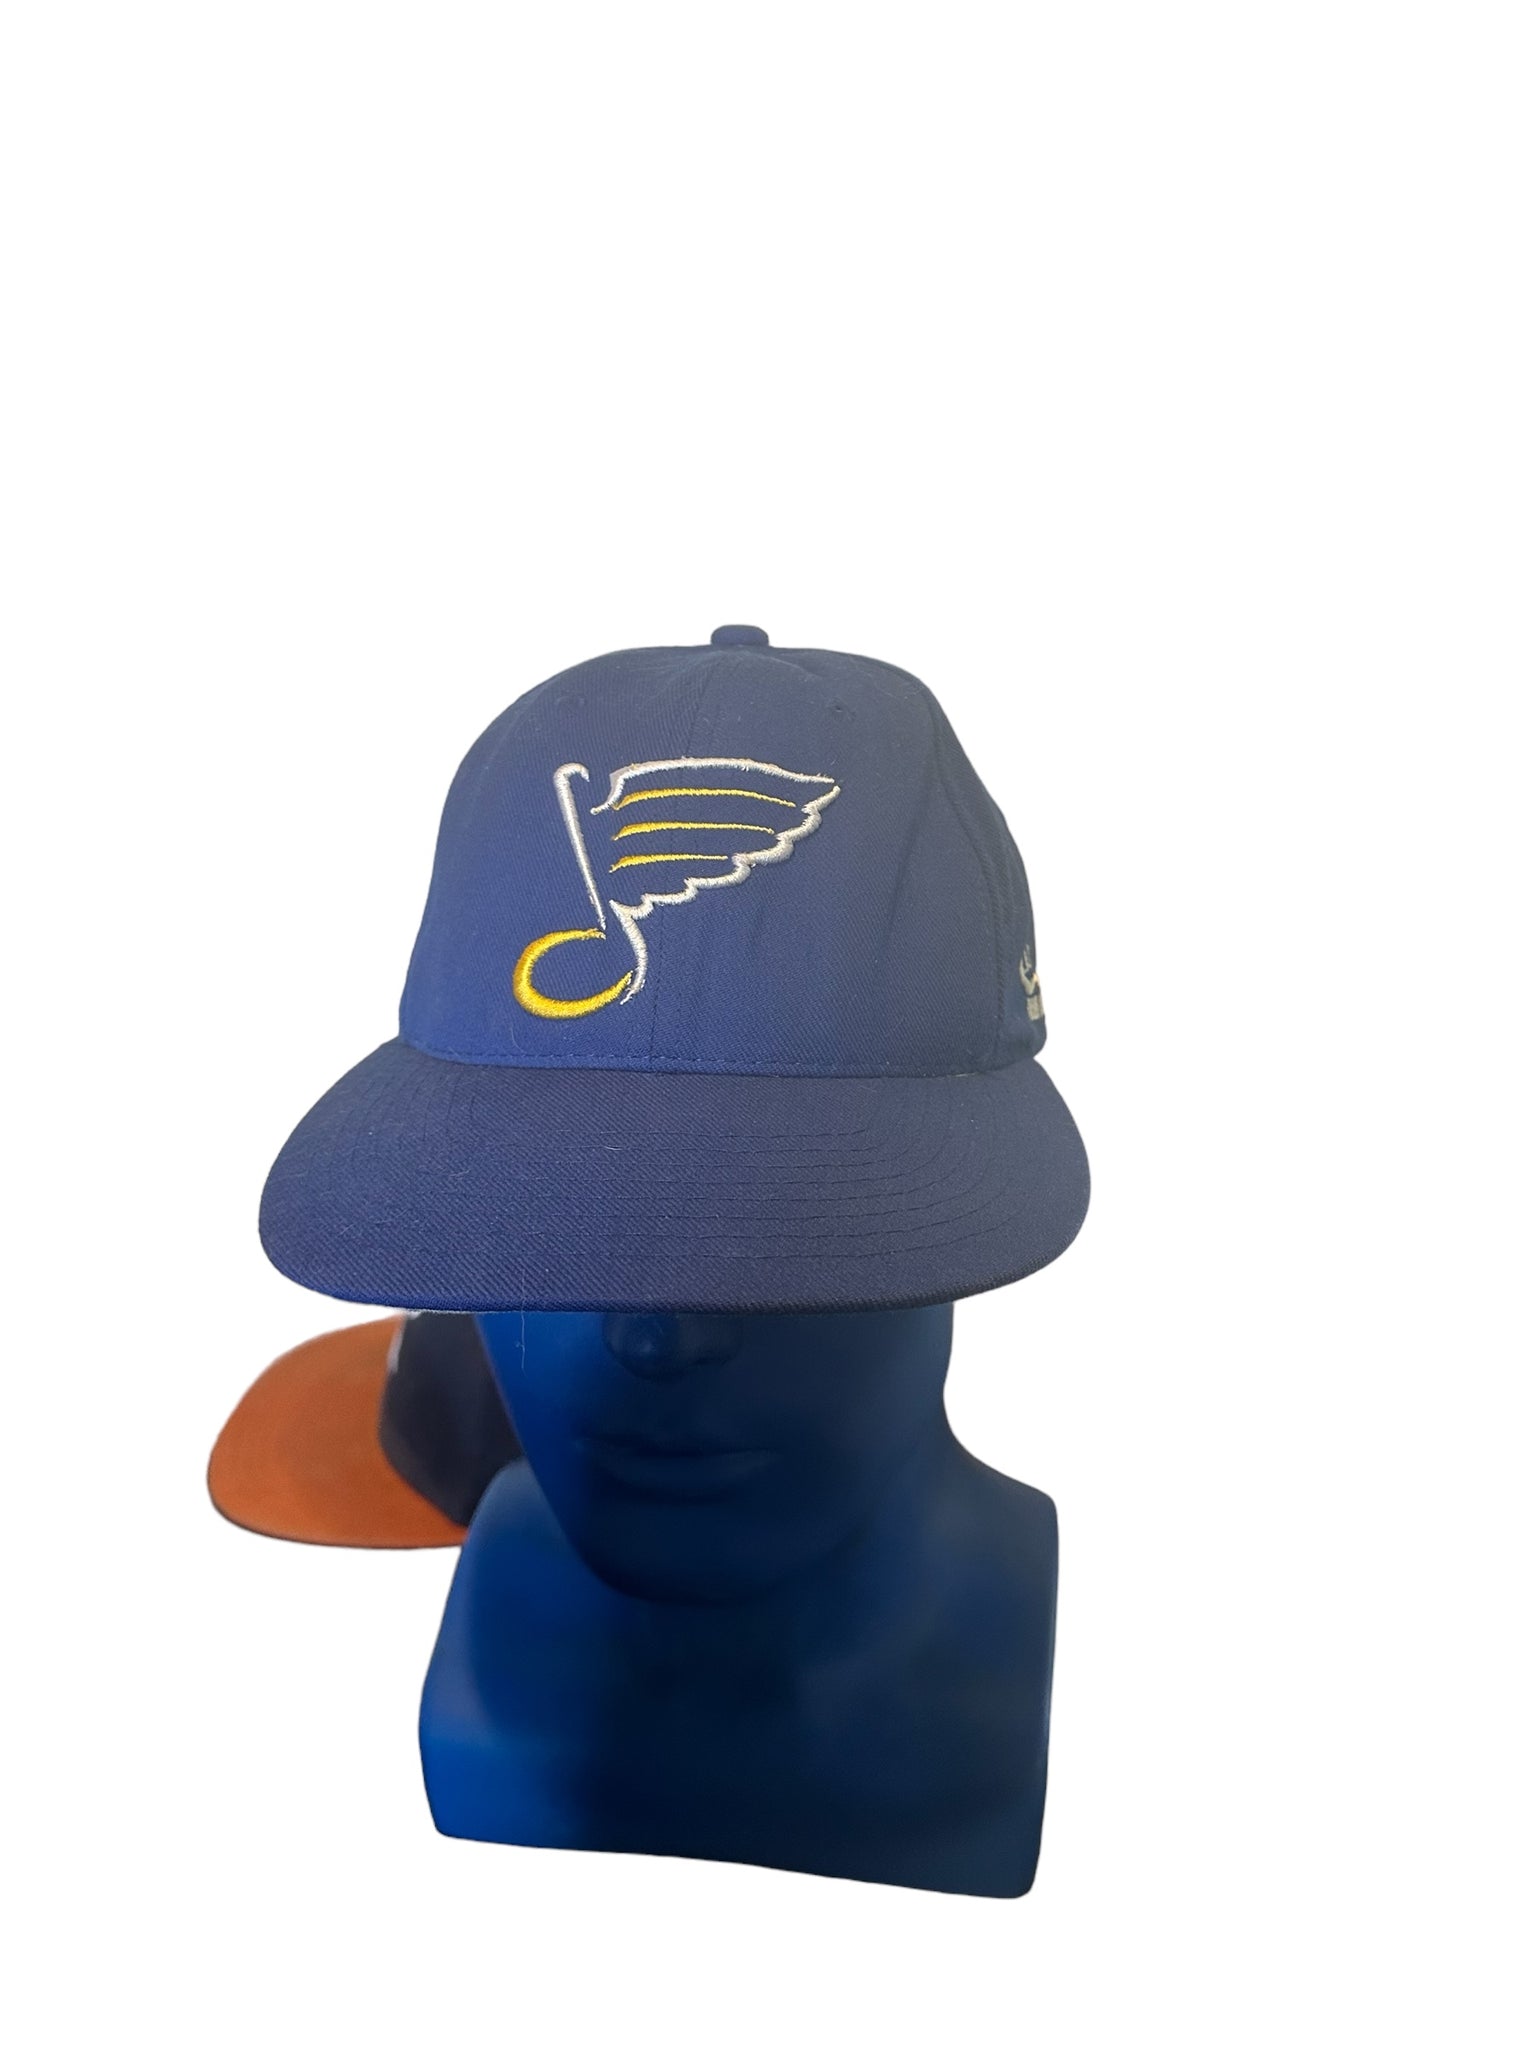 new era nhl st louis blues embroidered logo snapback hat